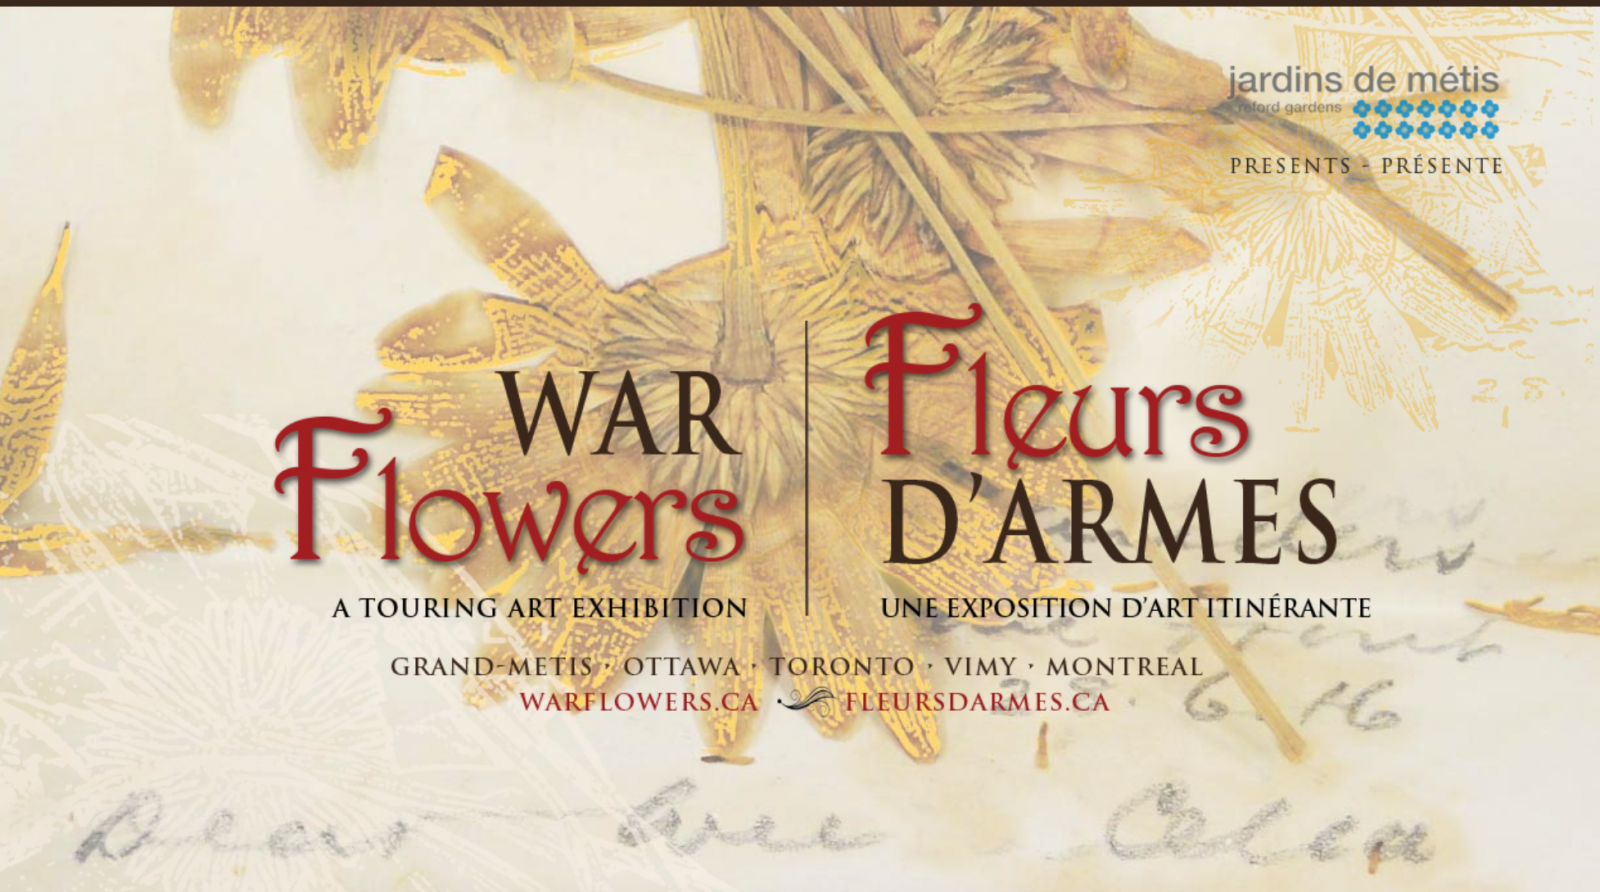 War flowers